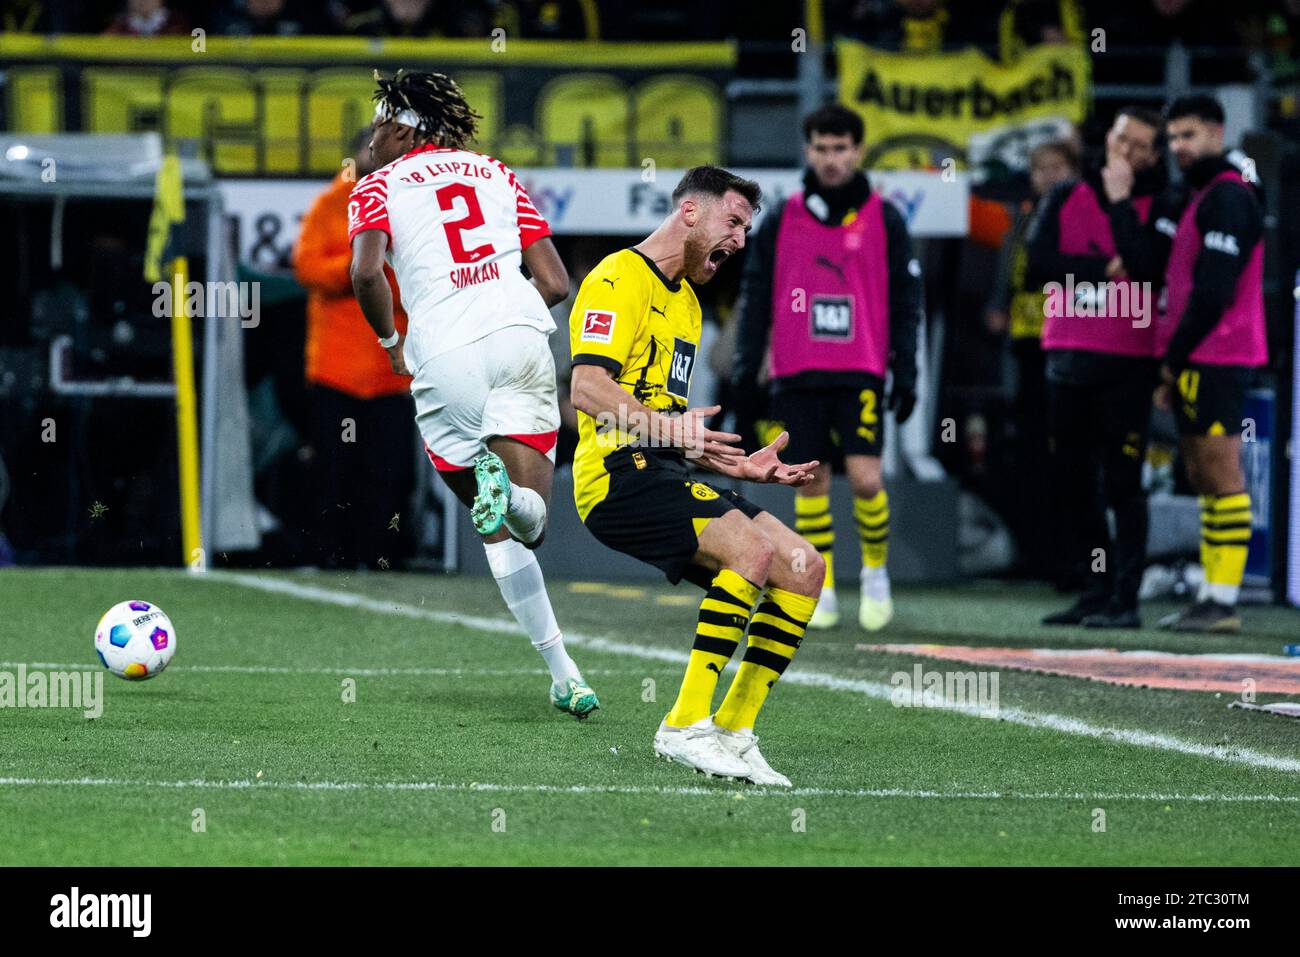 Dortmund, SignaI Iduna Park, 09.12.23: Salih Özcan (Dortmund) wütend beim Spiel 1.BL Borussia Dortmund vs. RB Leipzig. Stockfoto